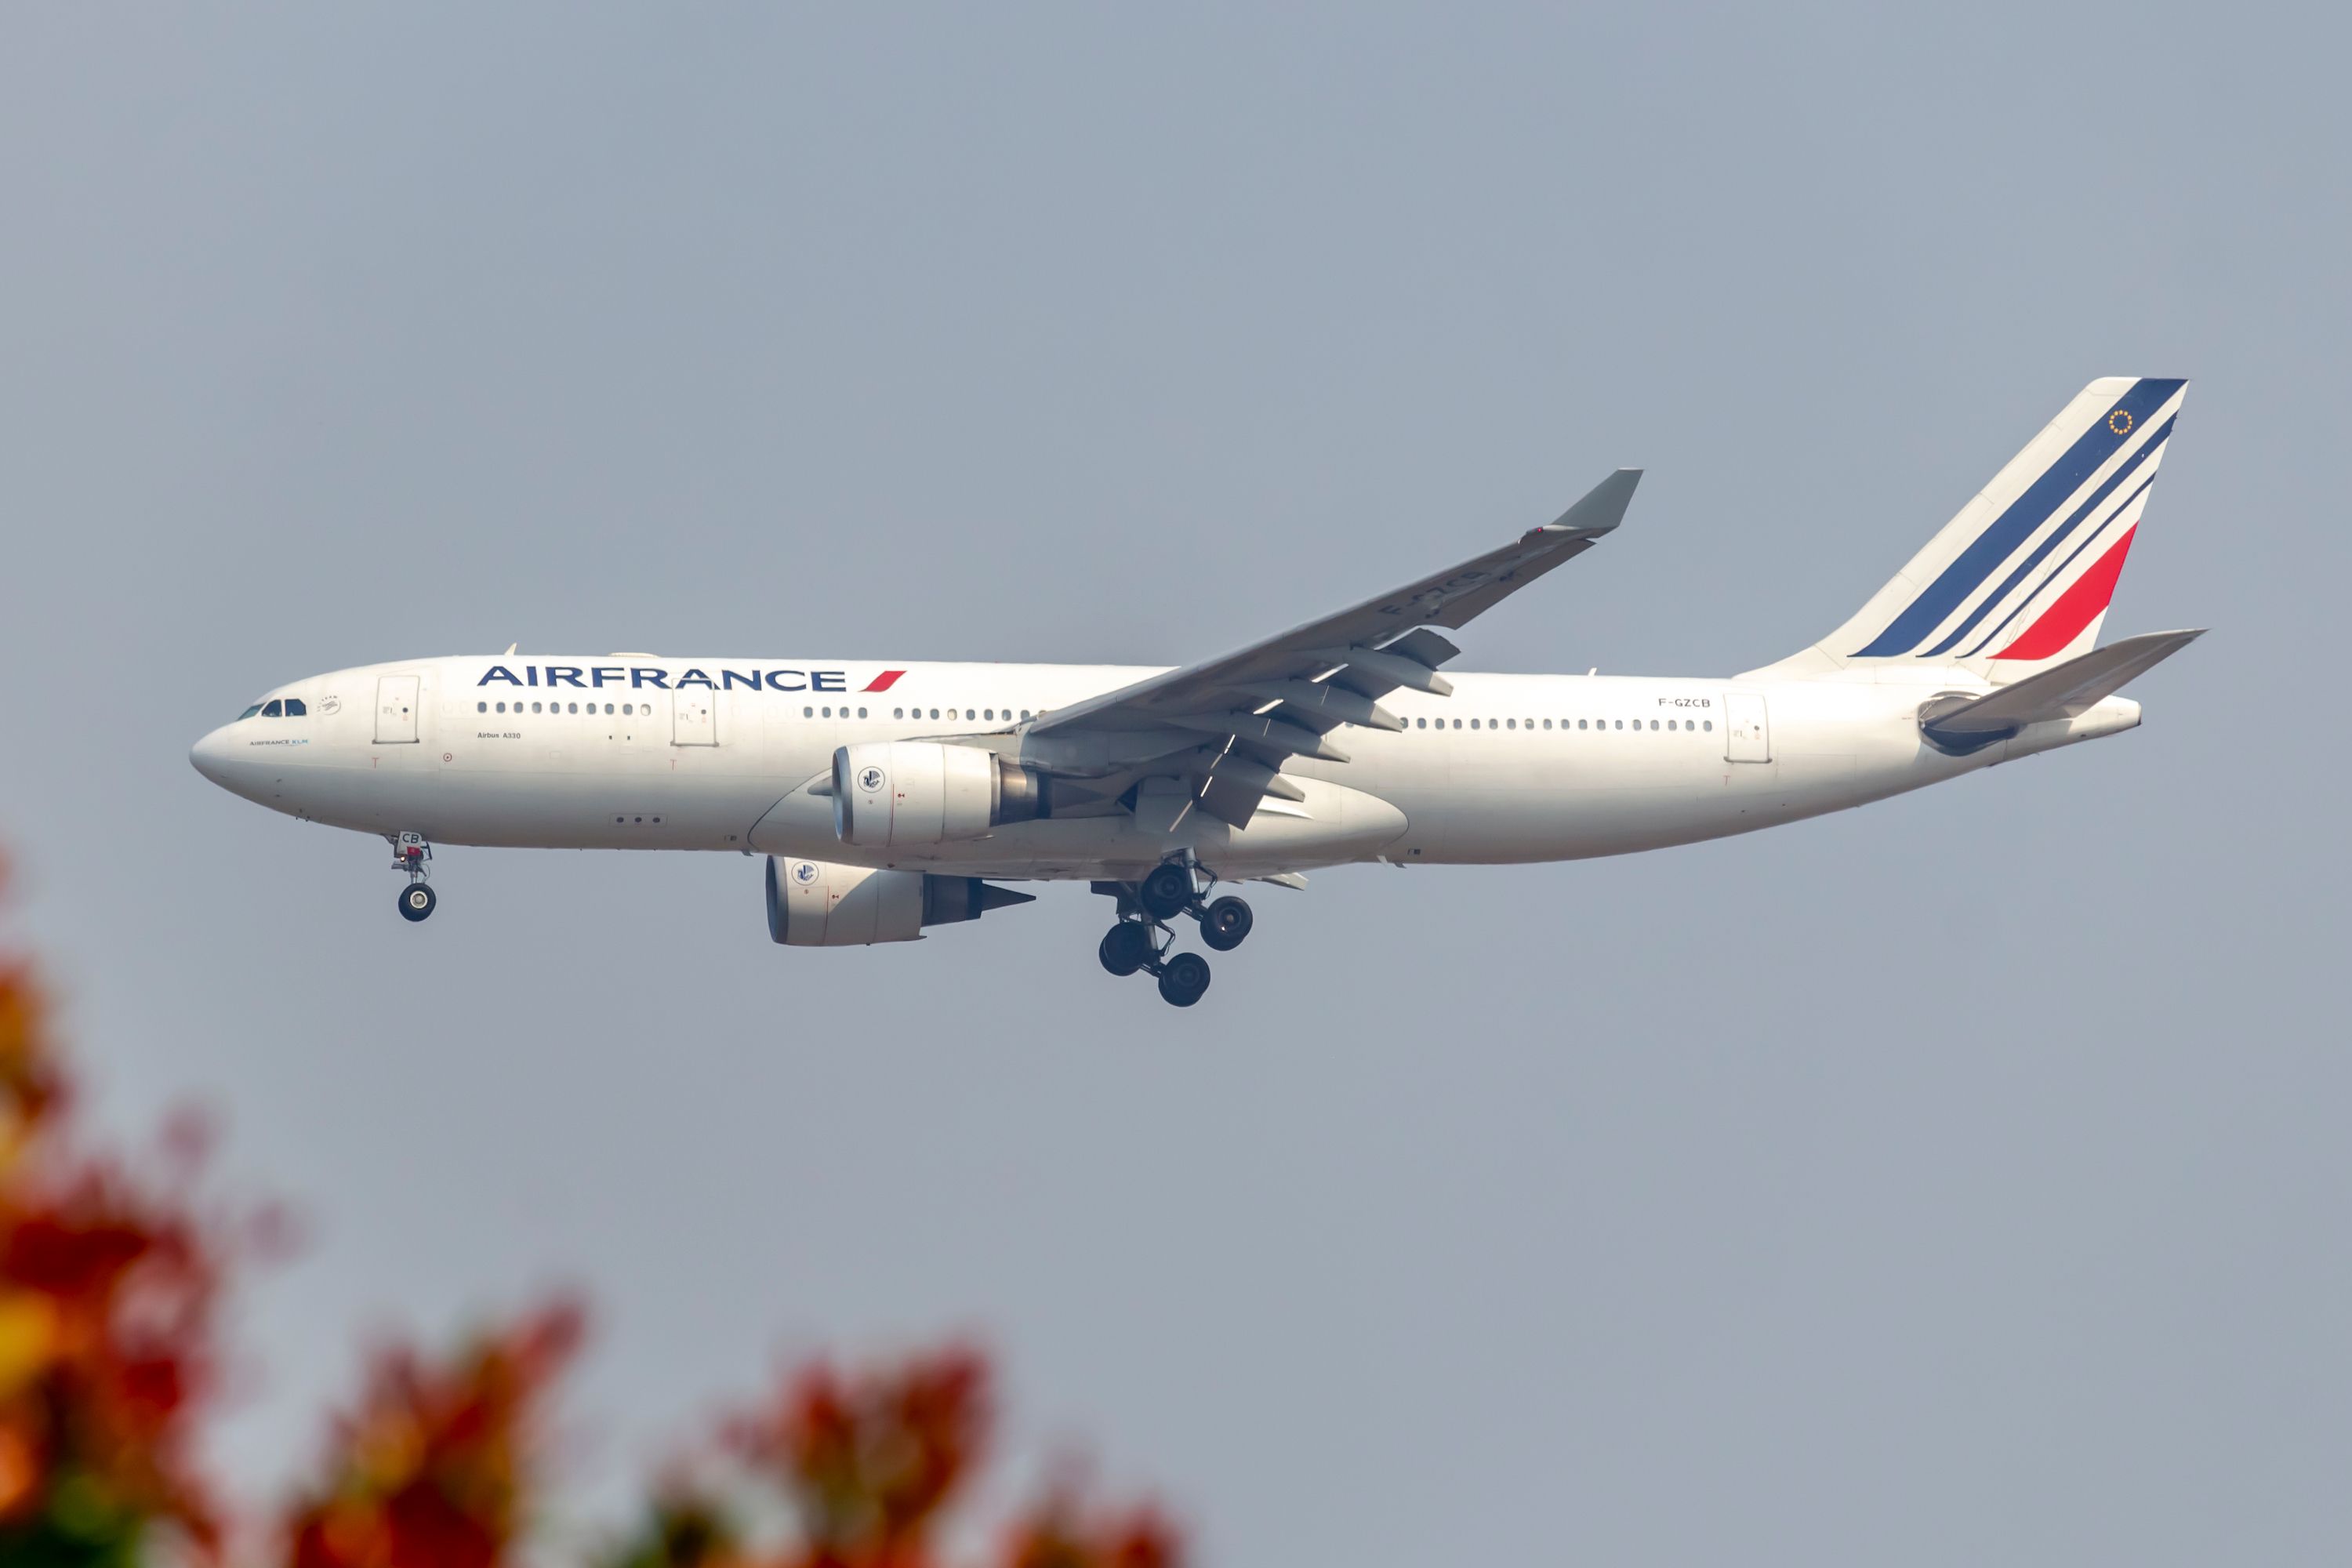 Air France A330-200 in flight